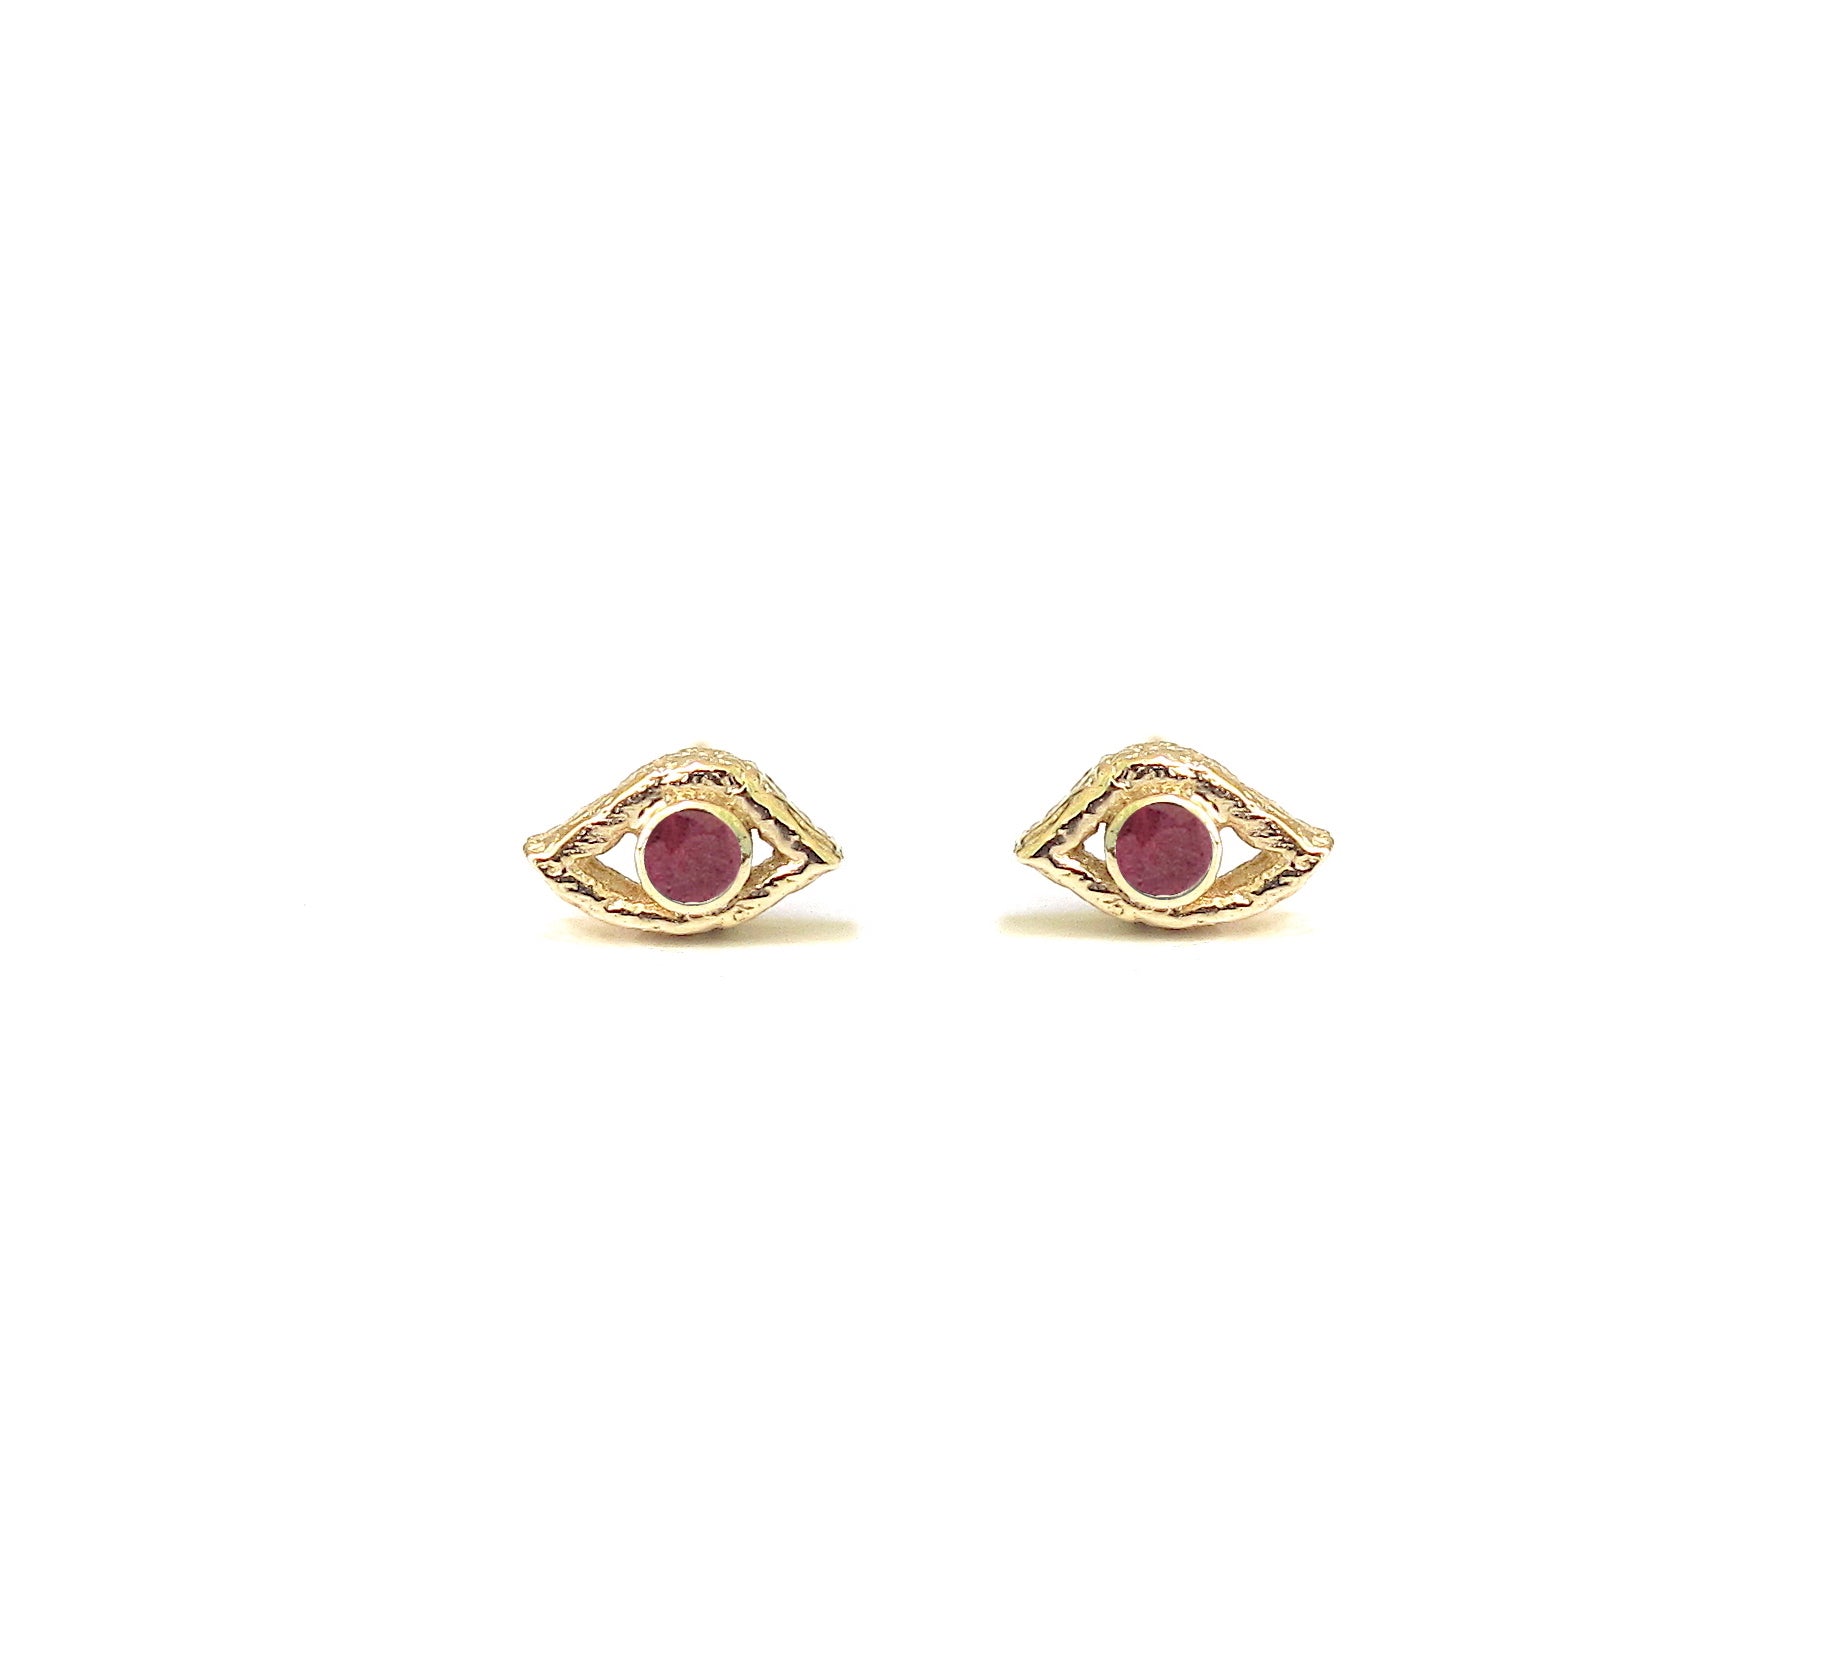 Eye ruby stud earrings